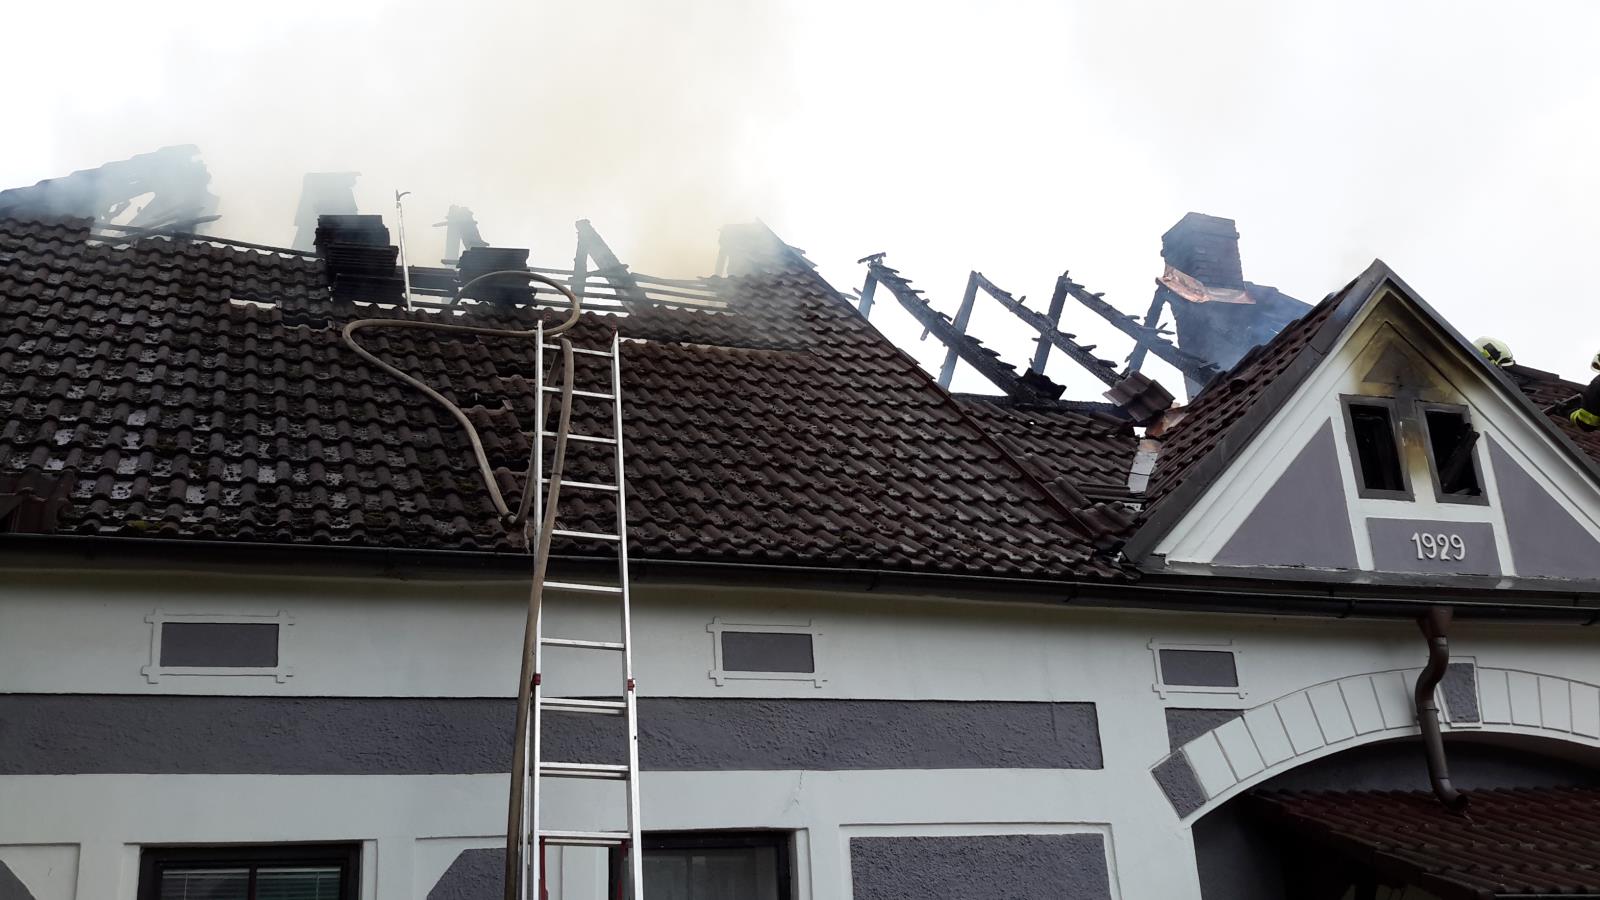 Požár střechy, Tupesy - 11. 7. 2019 (3).jpg